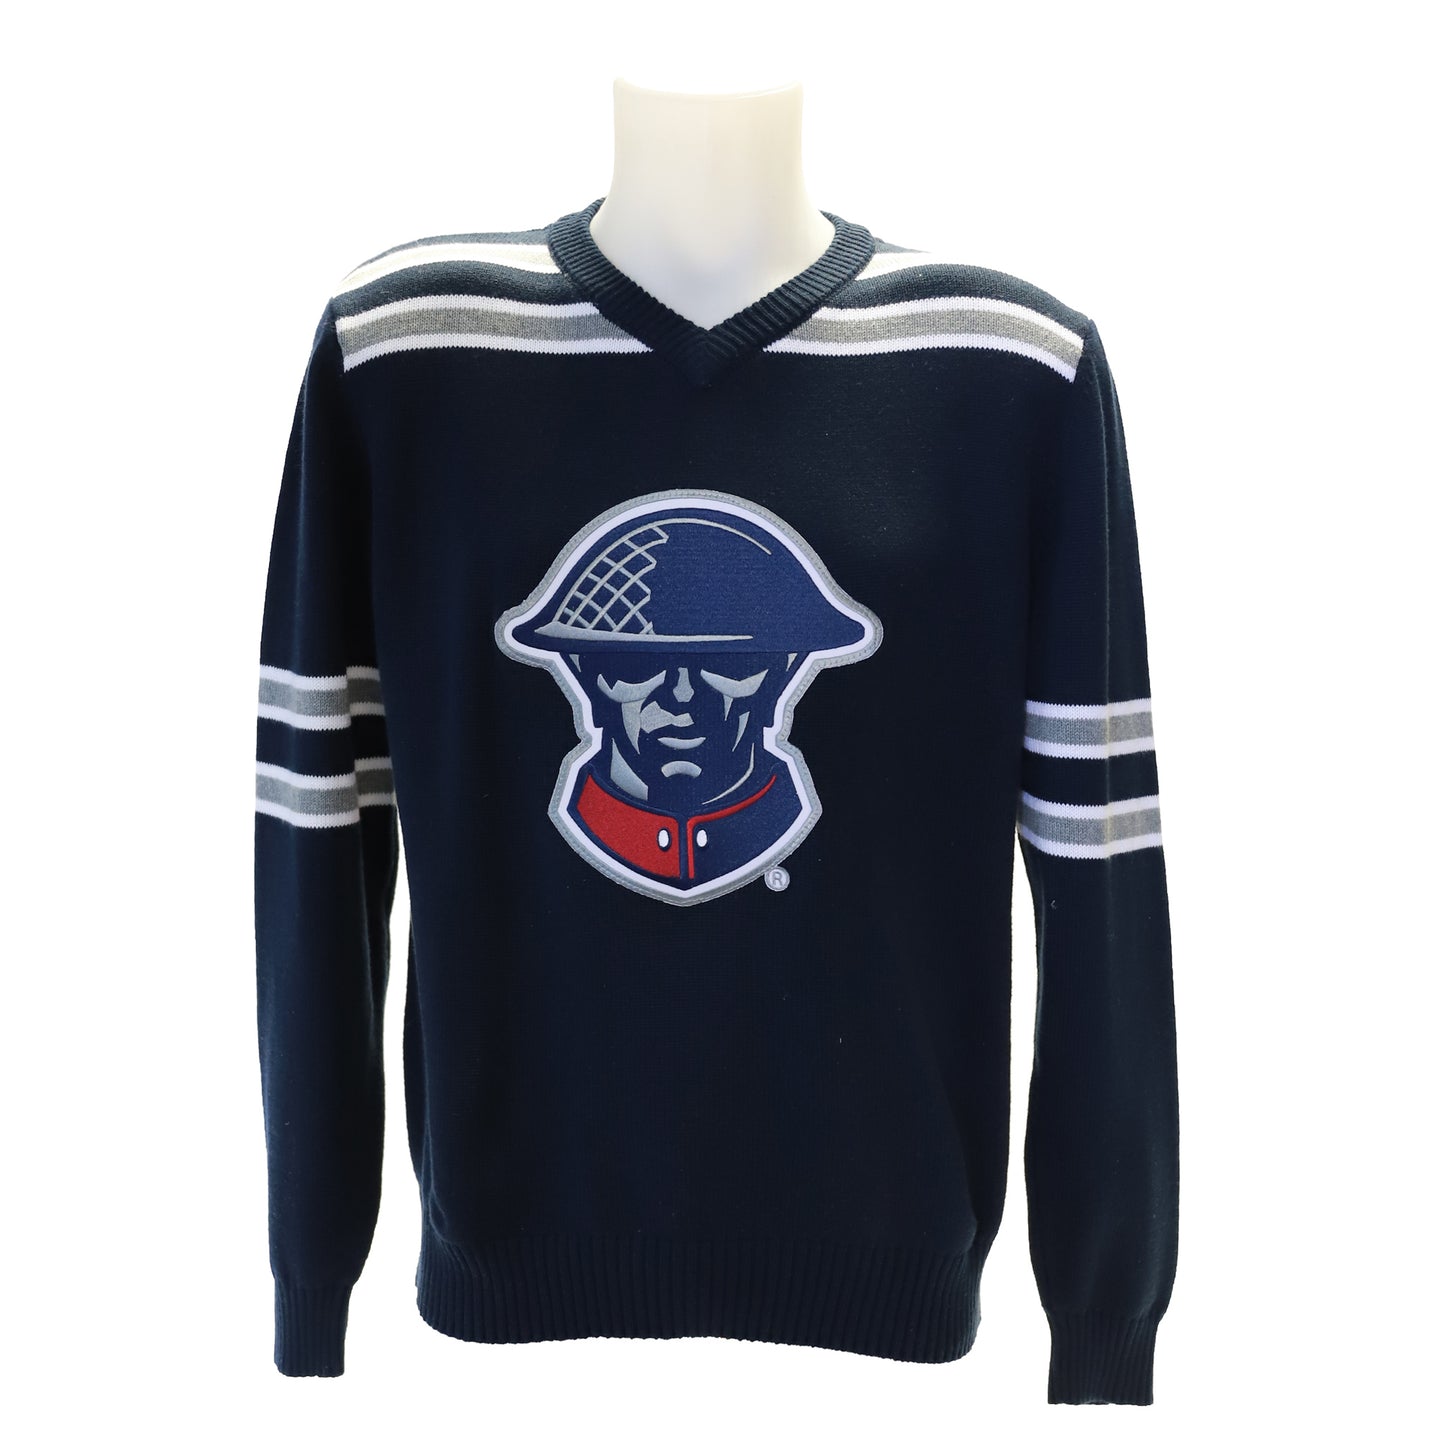 Men's Bruzer Vintage Sweater - Rangers Authentics